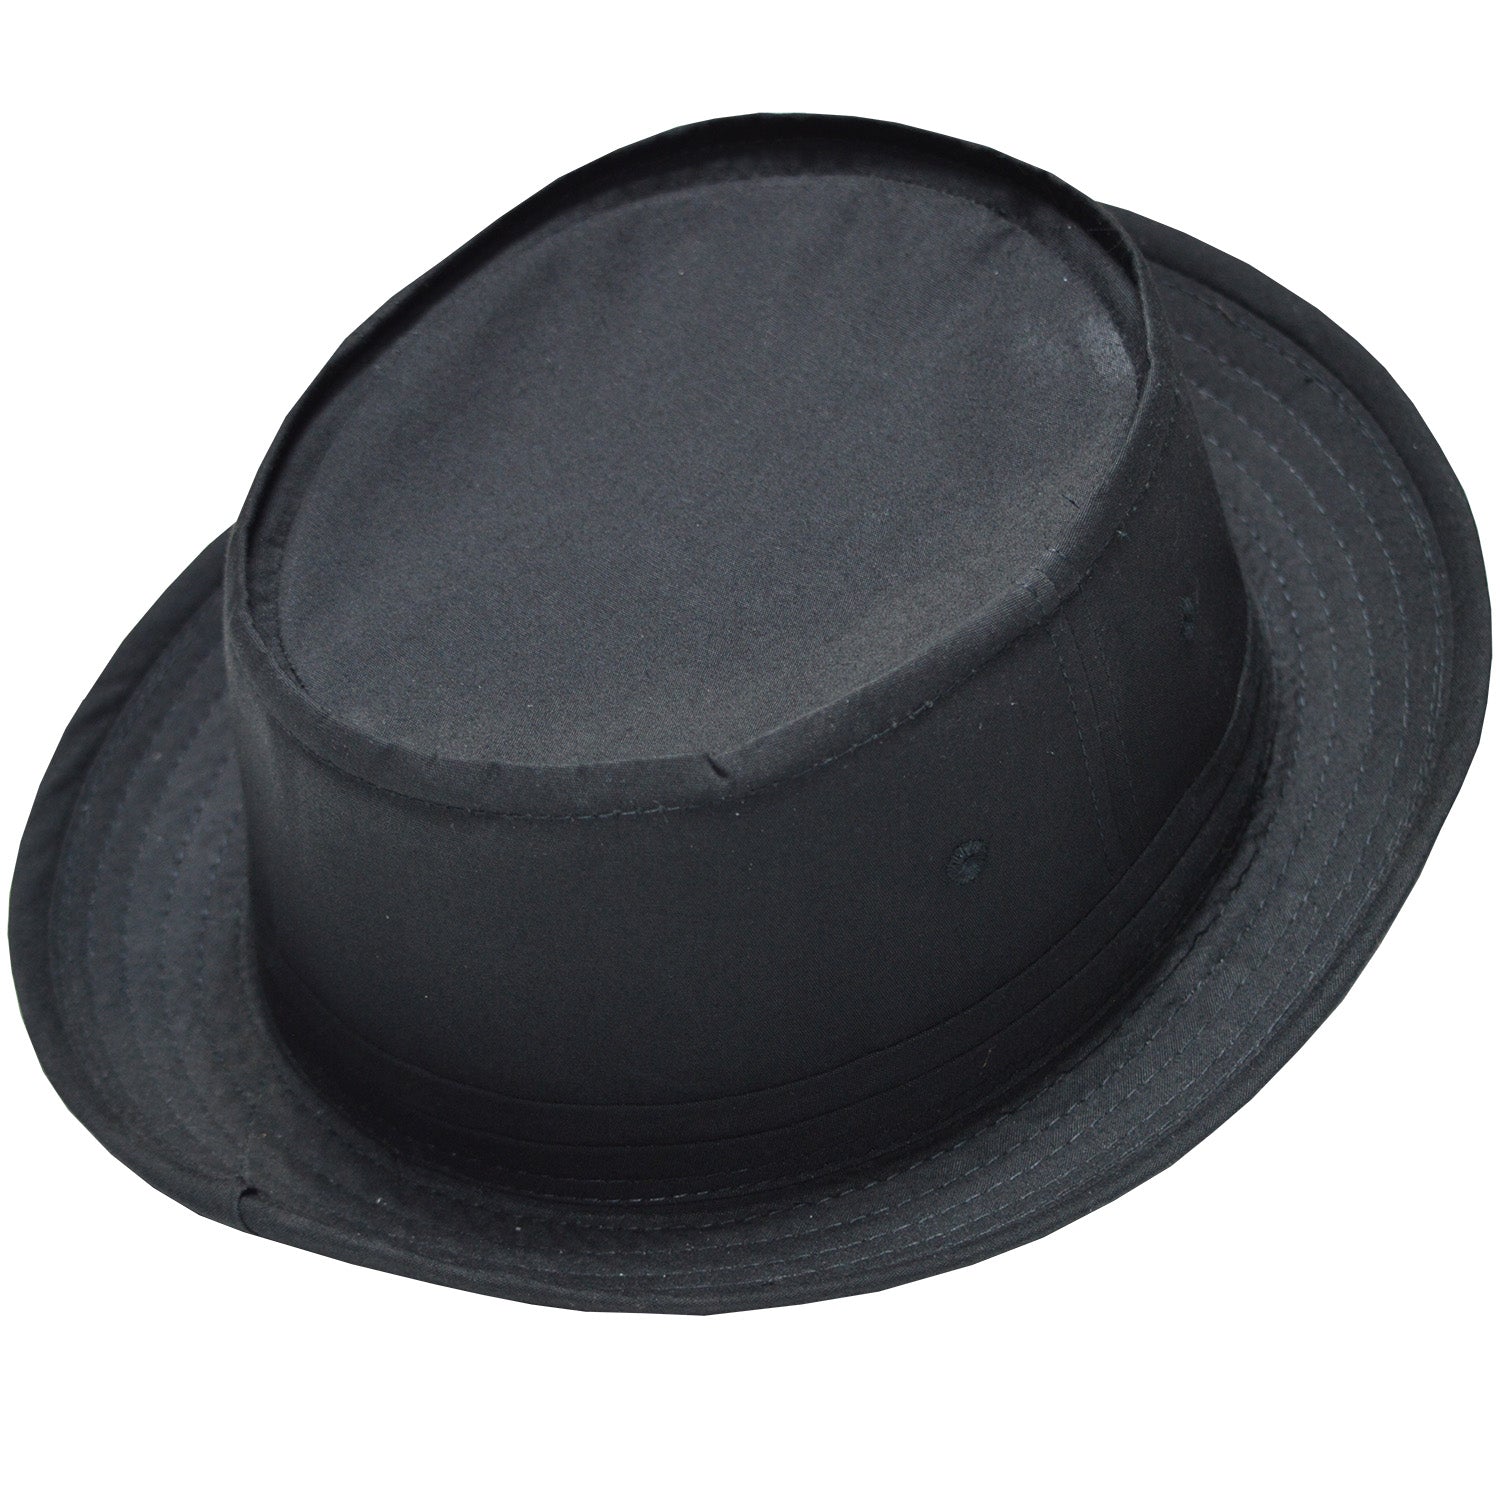 Broner Roll Up Bucket Hat in Black